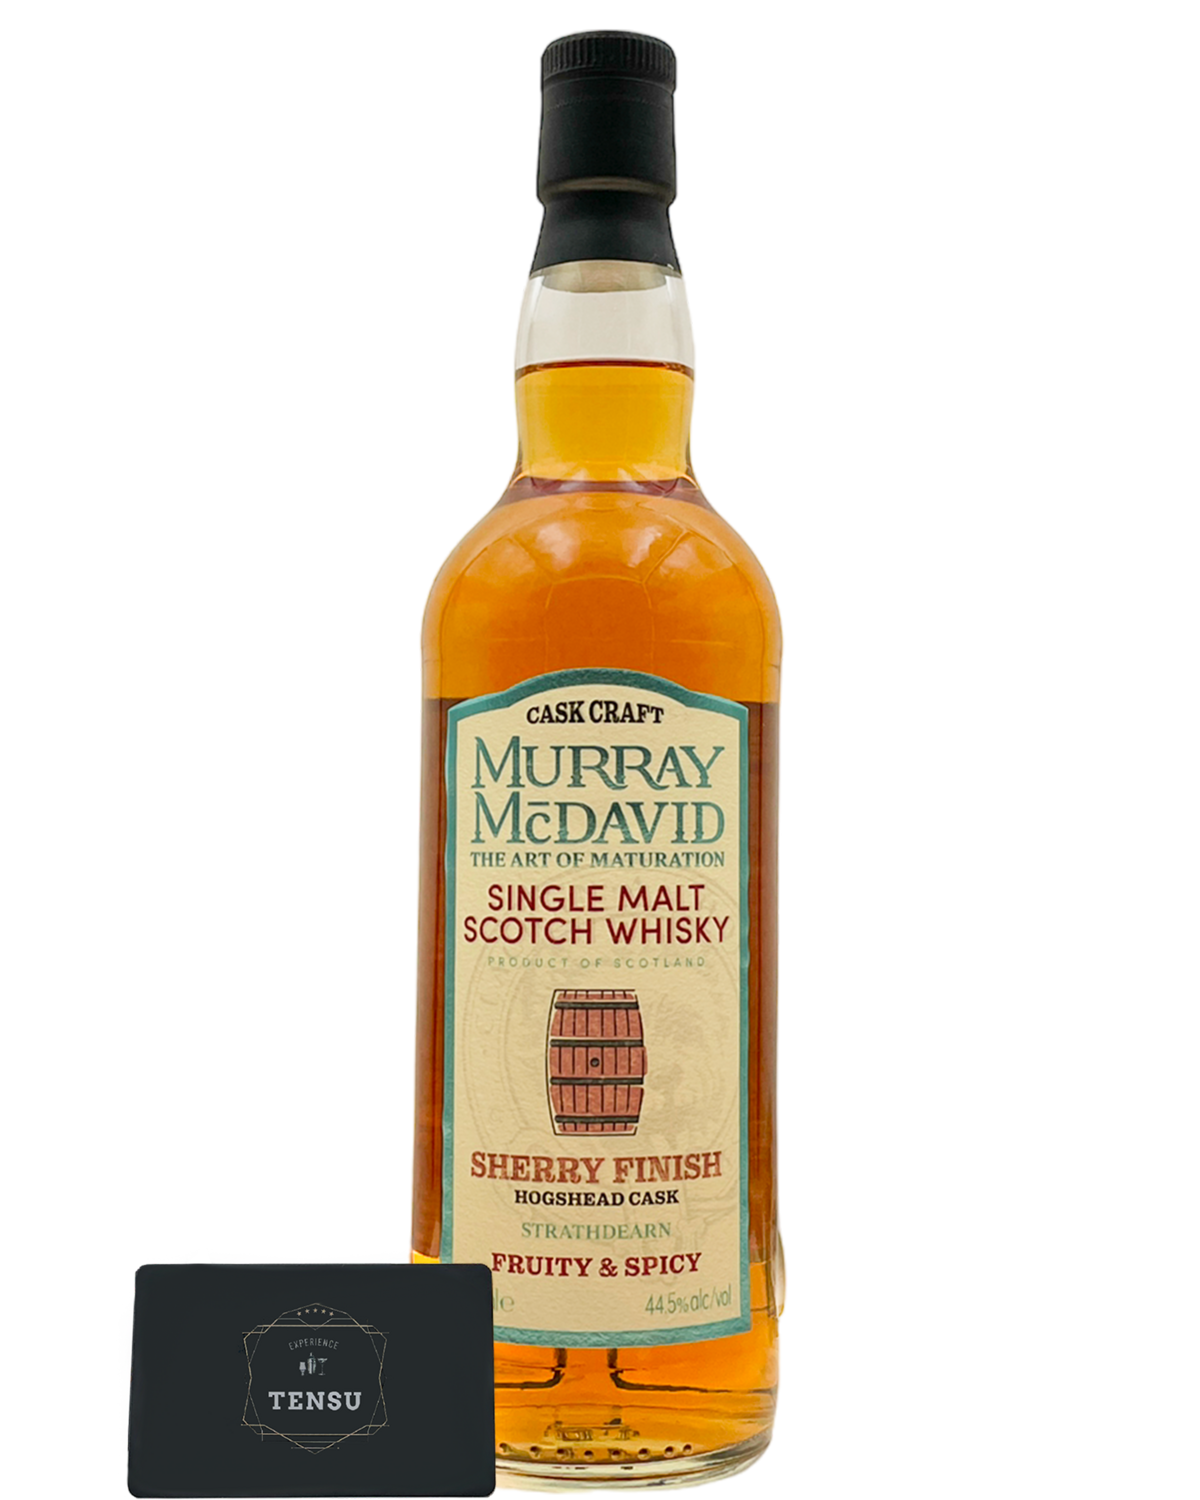 Strathdearn NAS Fruity & Spicy (2022) Cask Craft Sherry Finish 44.5 #SHRY-01 "Murray McDavid"